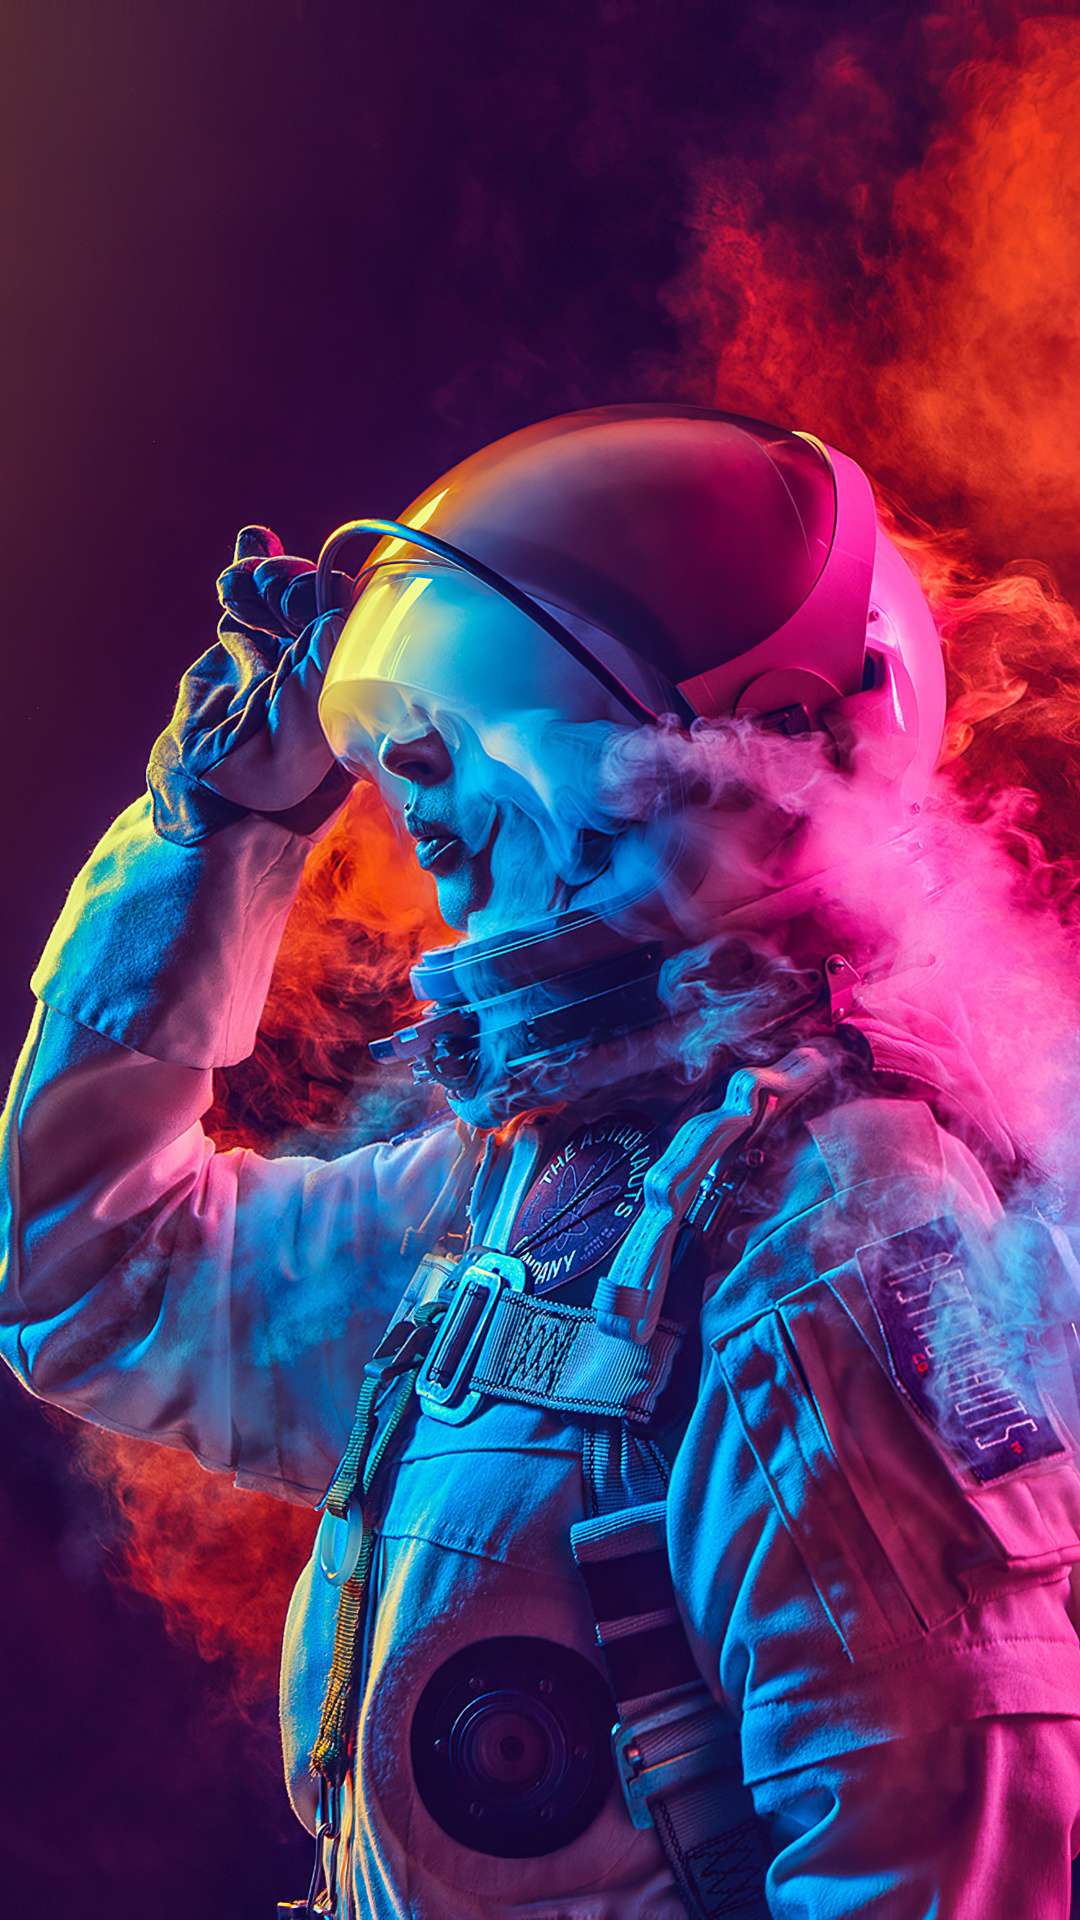 15 Fondos de Pantalla de Astronautas - Wallpapers Links